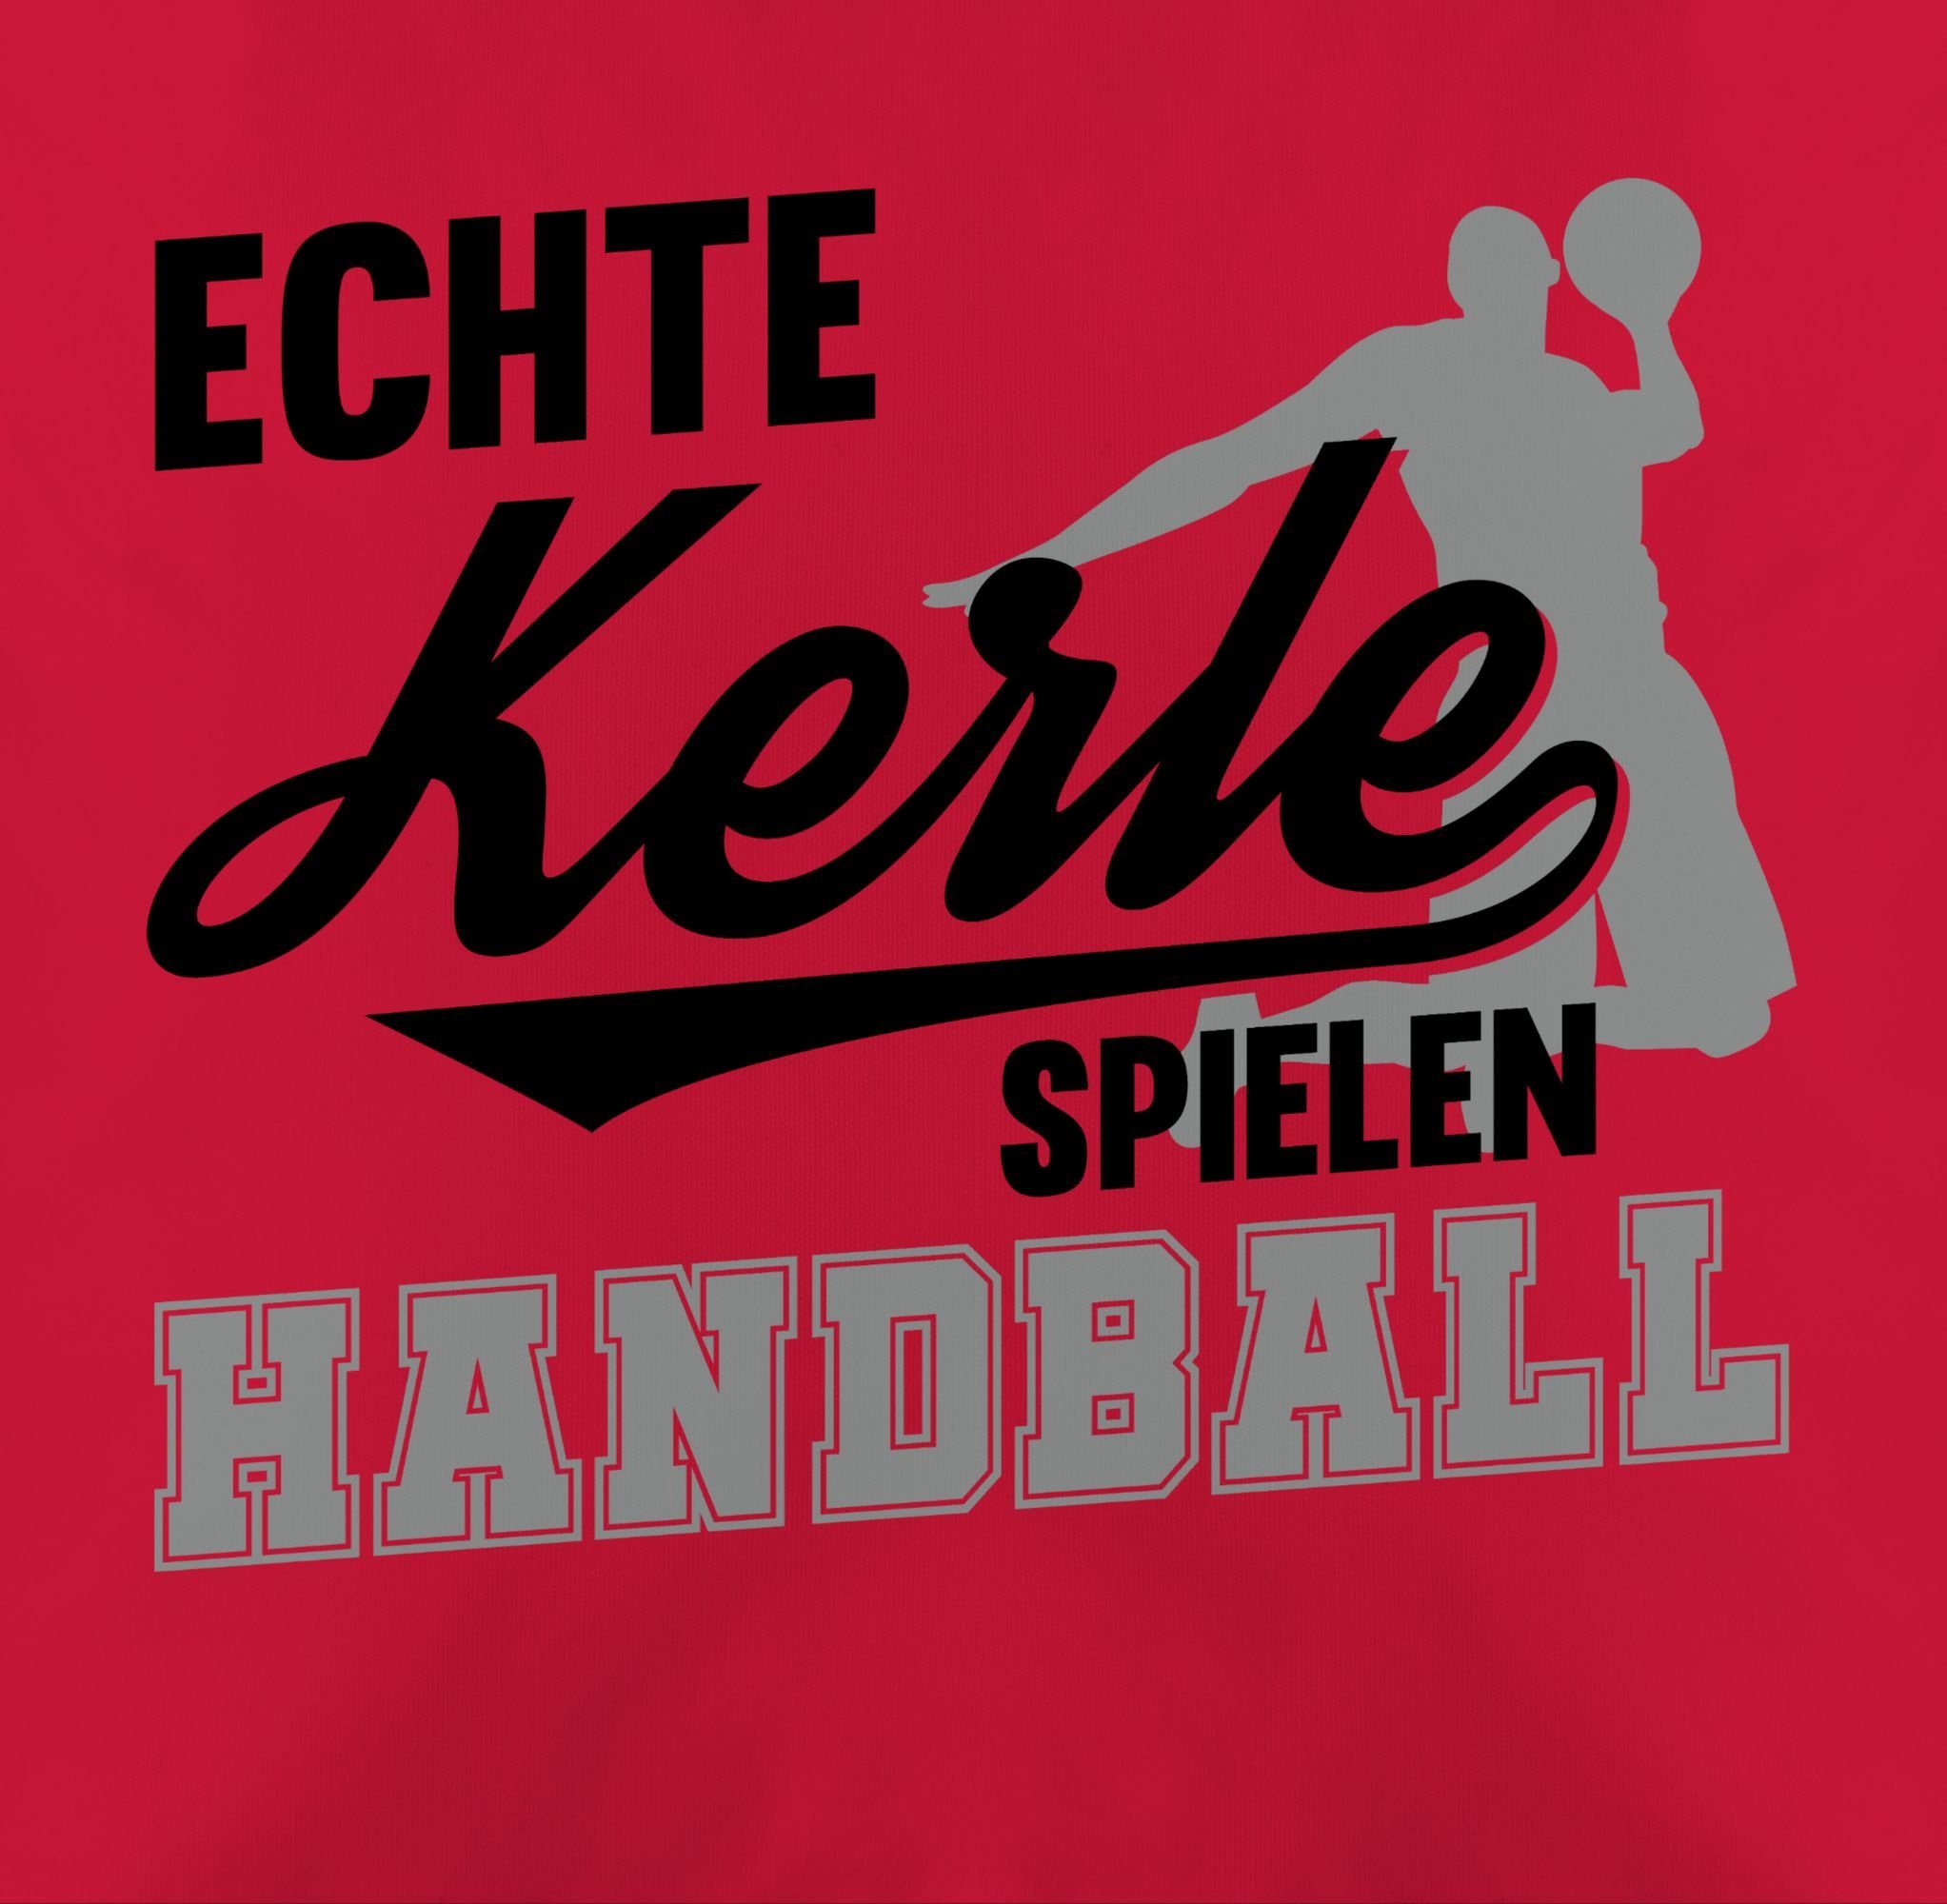 / Dekokissen 3 Handball Echte grau, schwarz Hobby Kerle spielen Deko-Kissen Rot Shirtracer